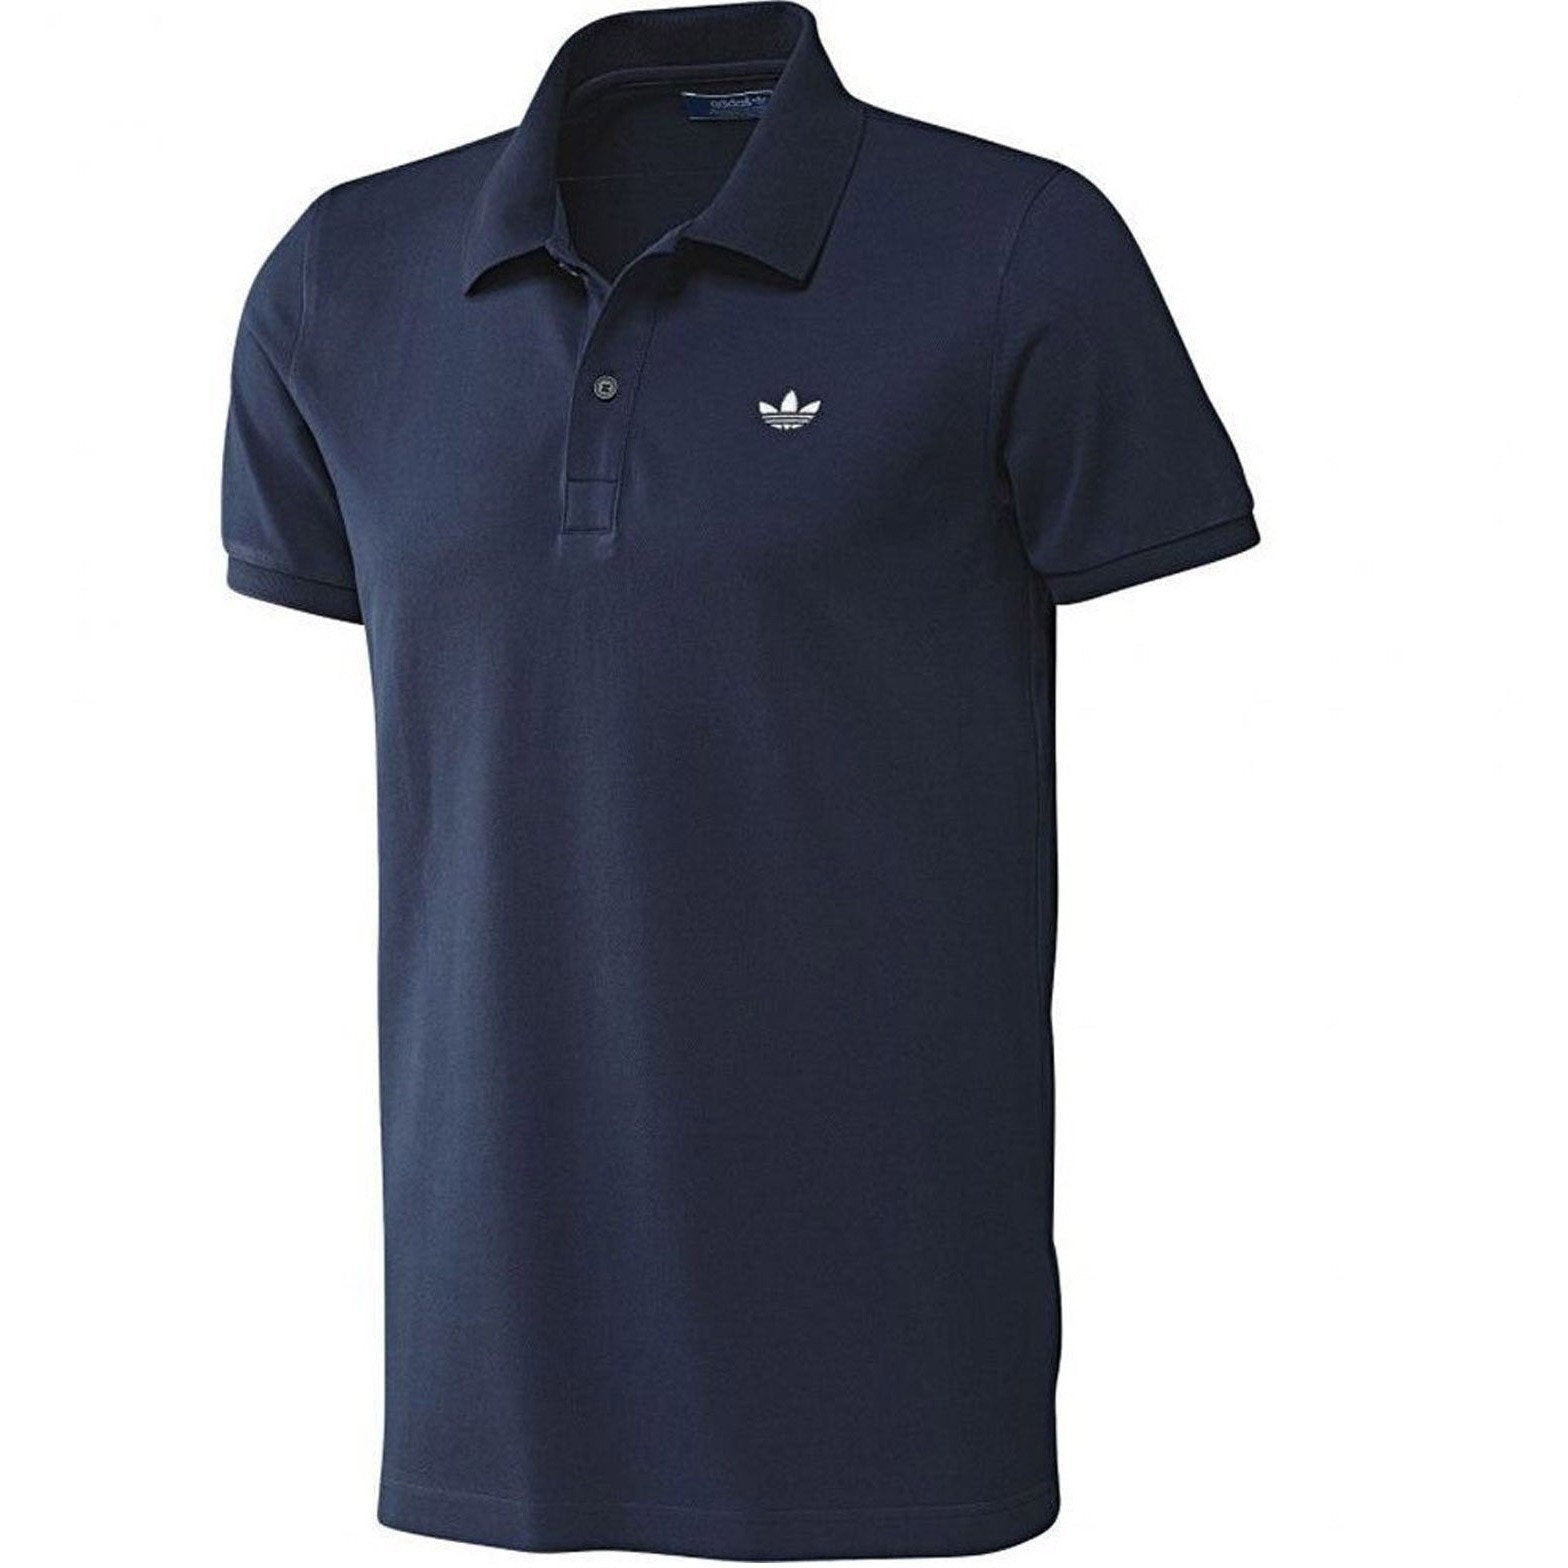 Adidas Polo Shirts - Navy